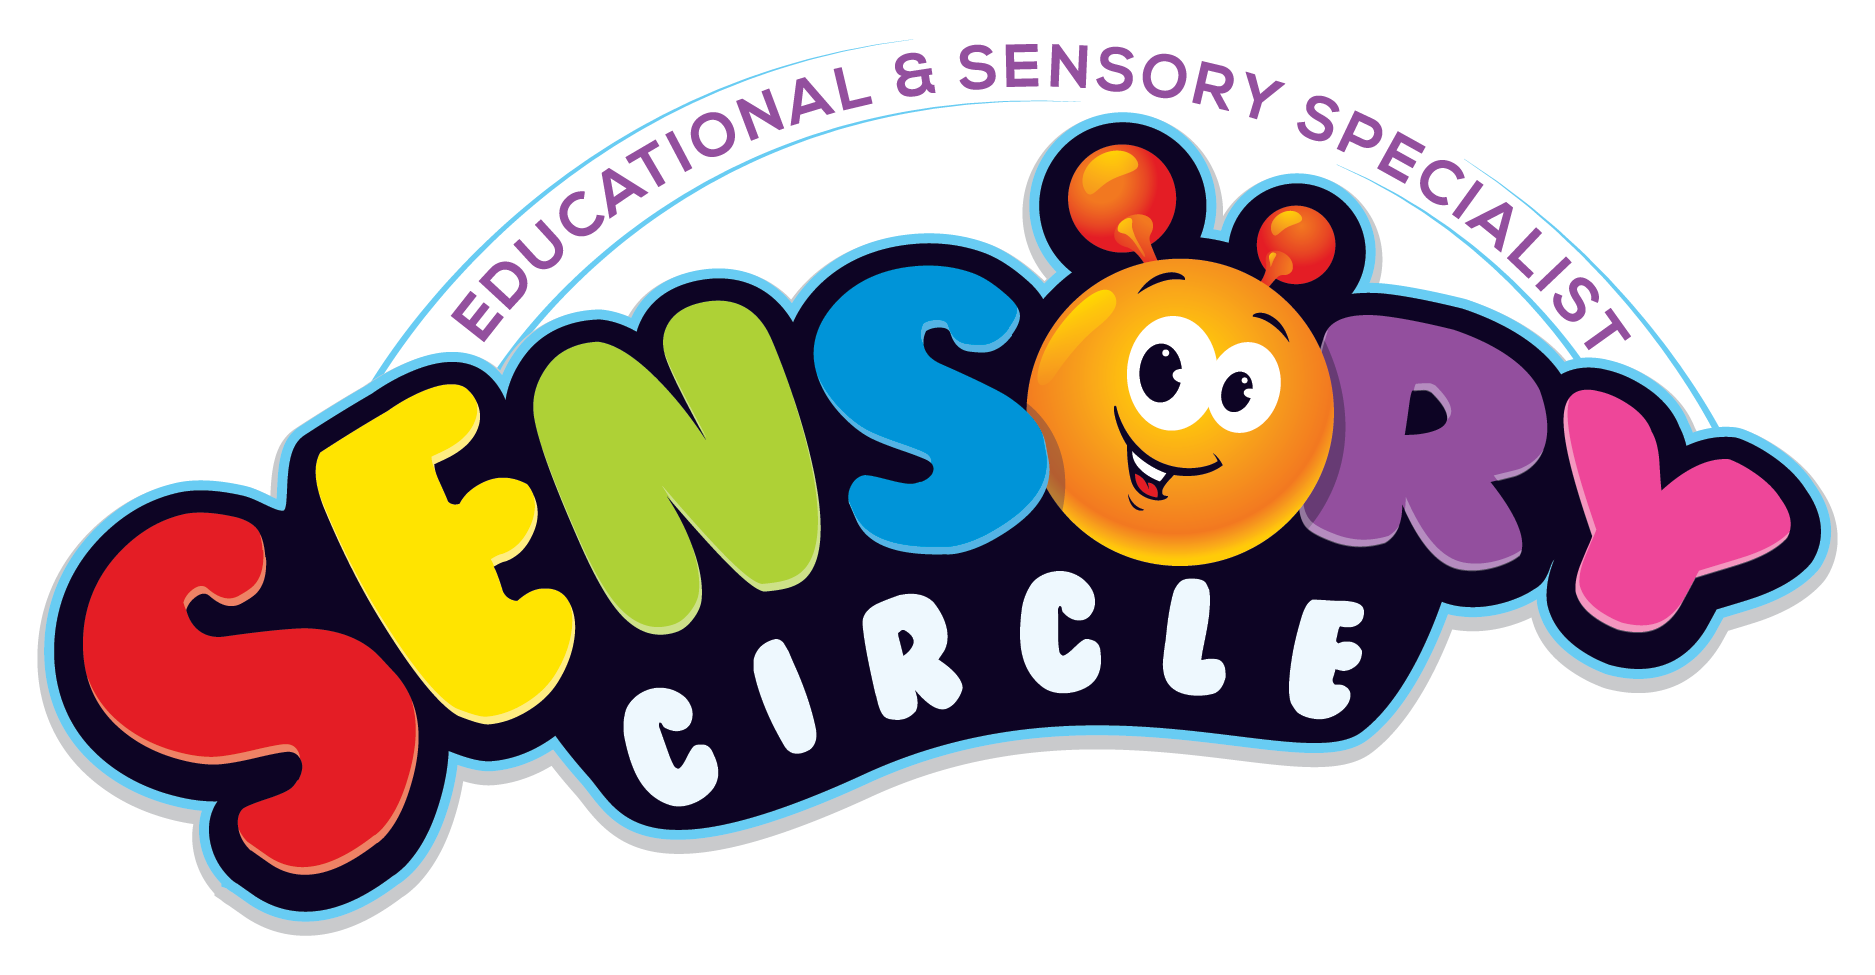 Sensory Circle